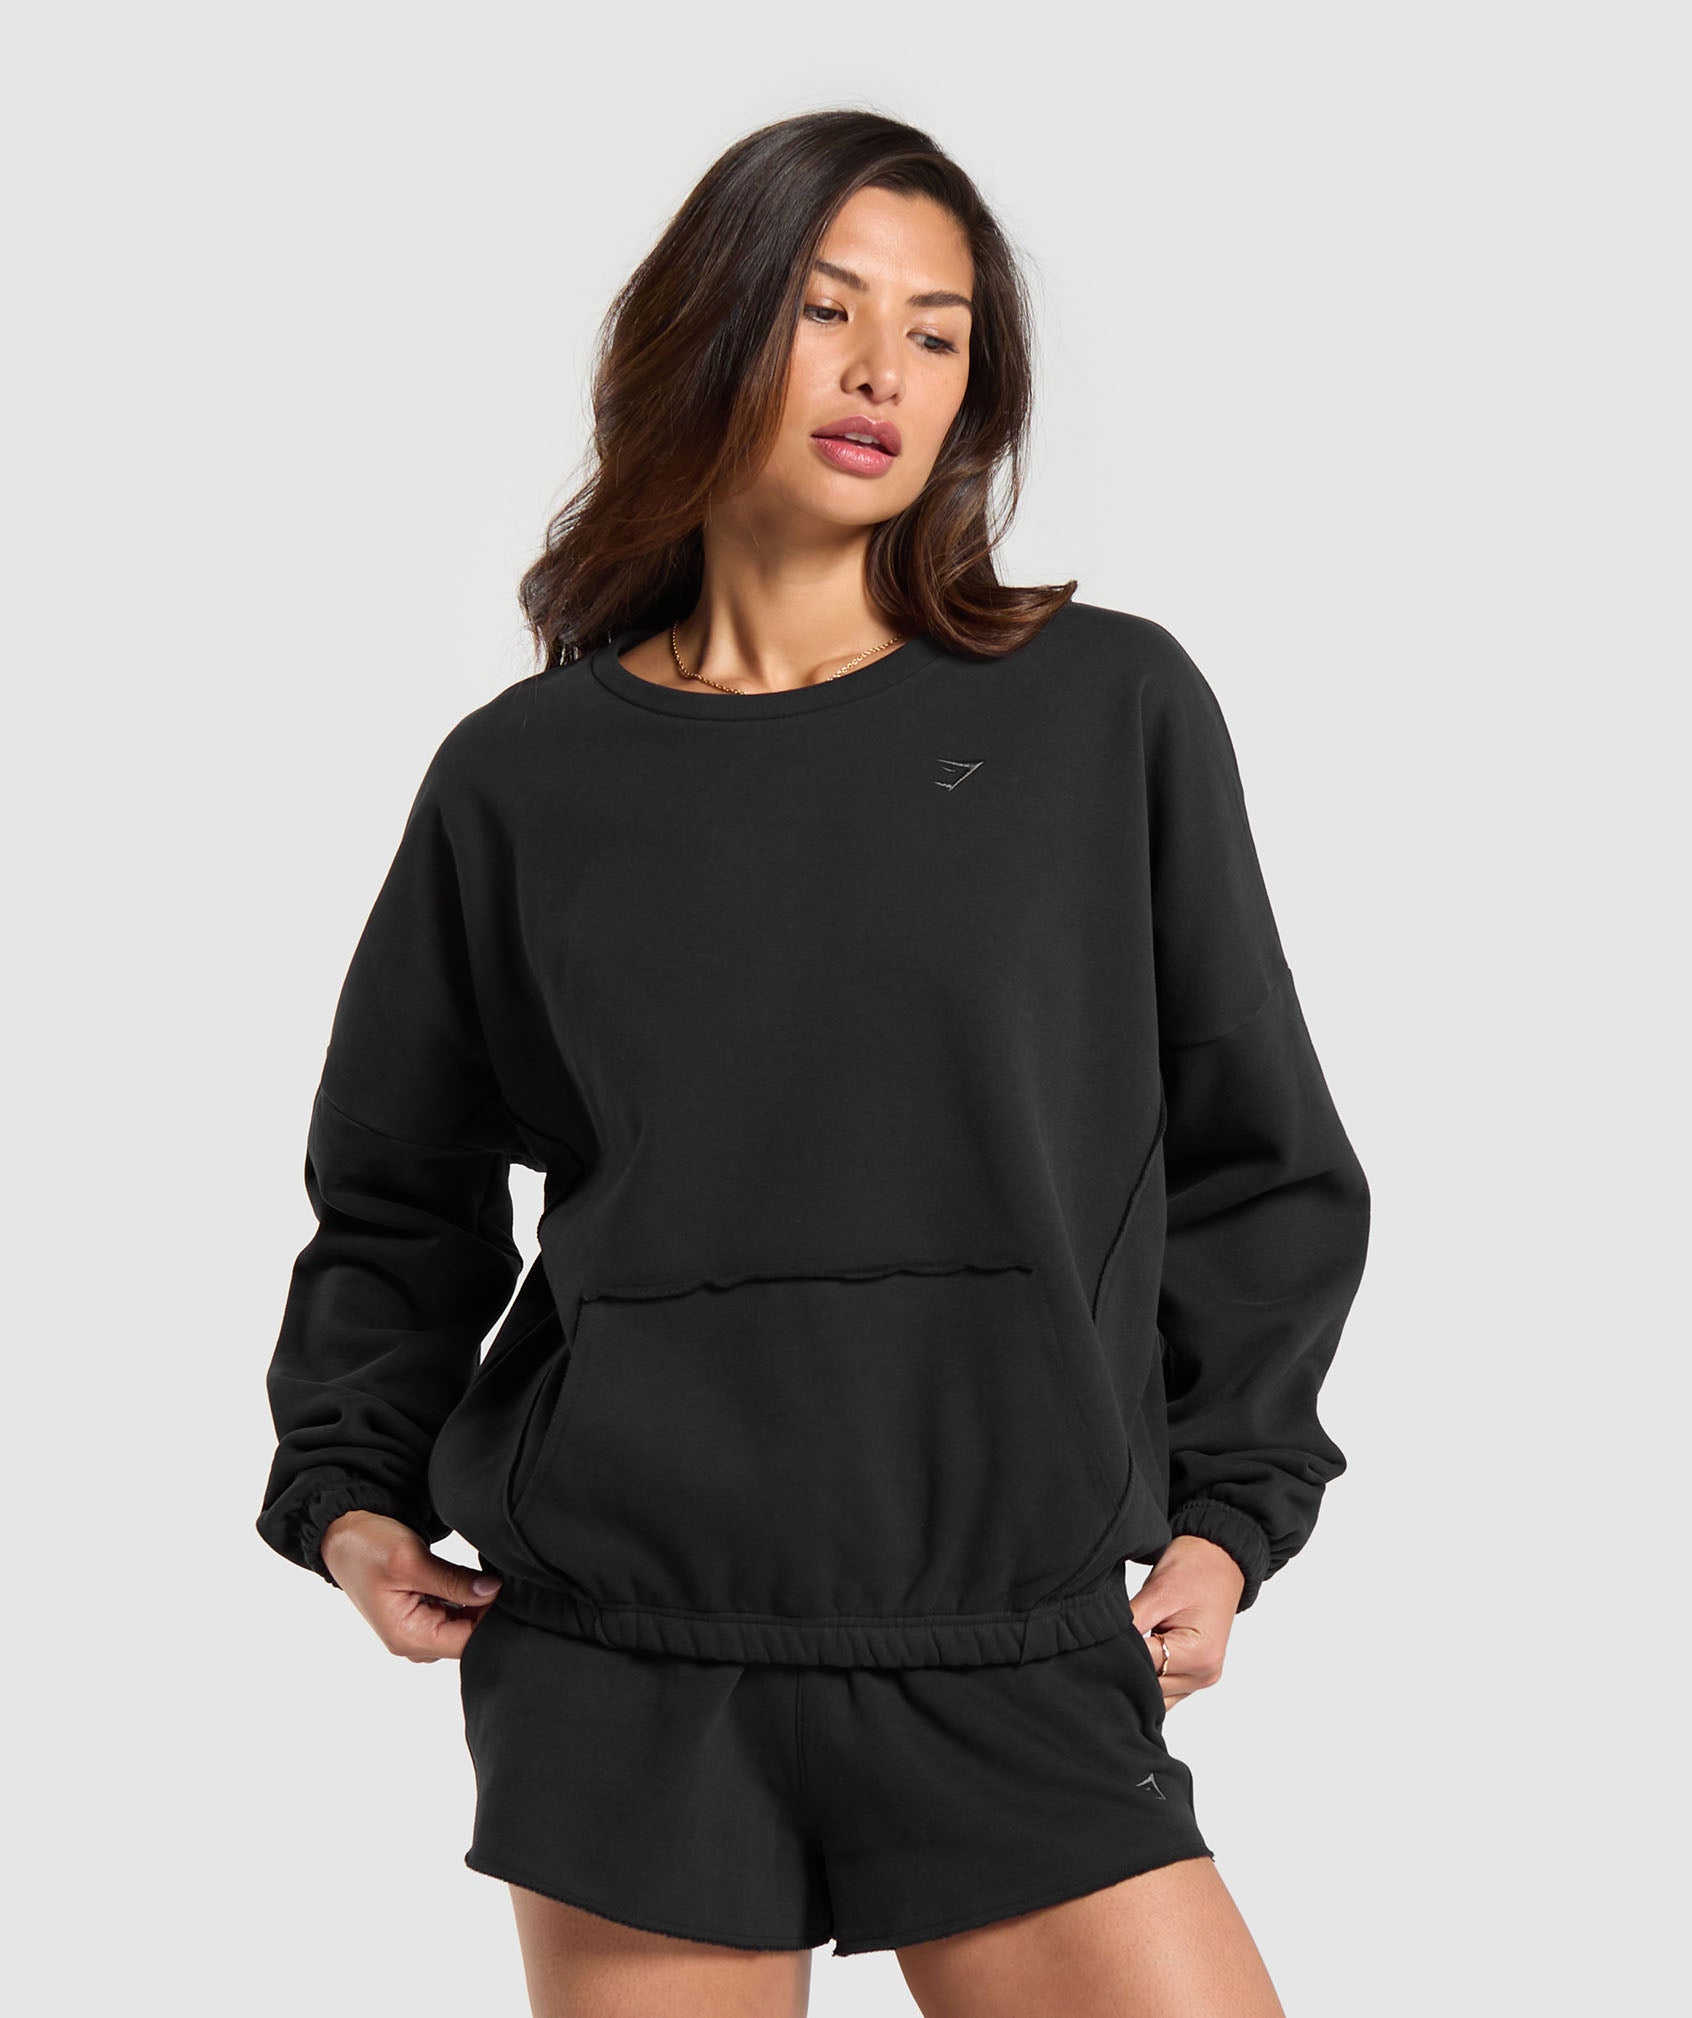 Fleece Oversized Sweatshirt in Black